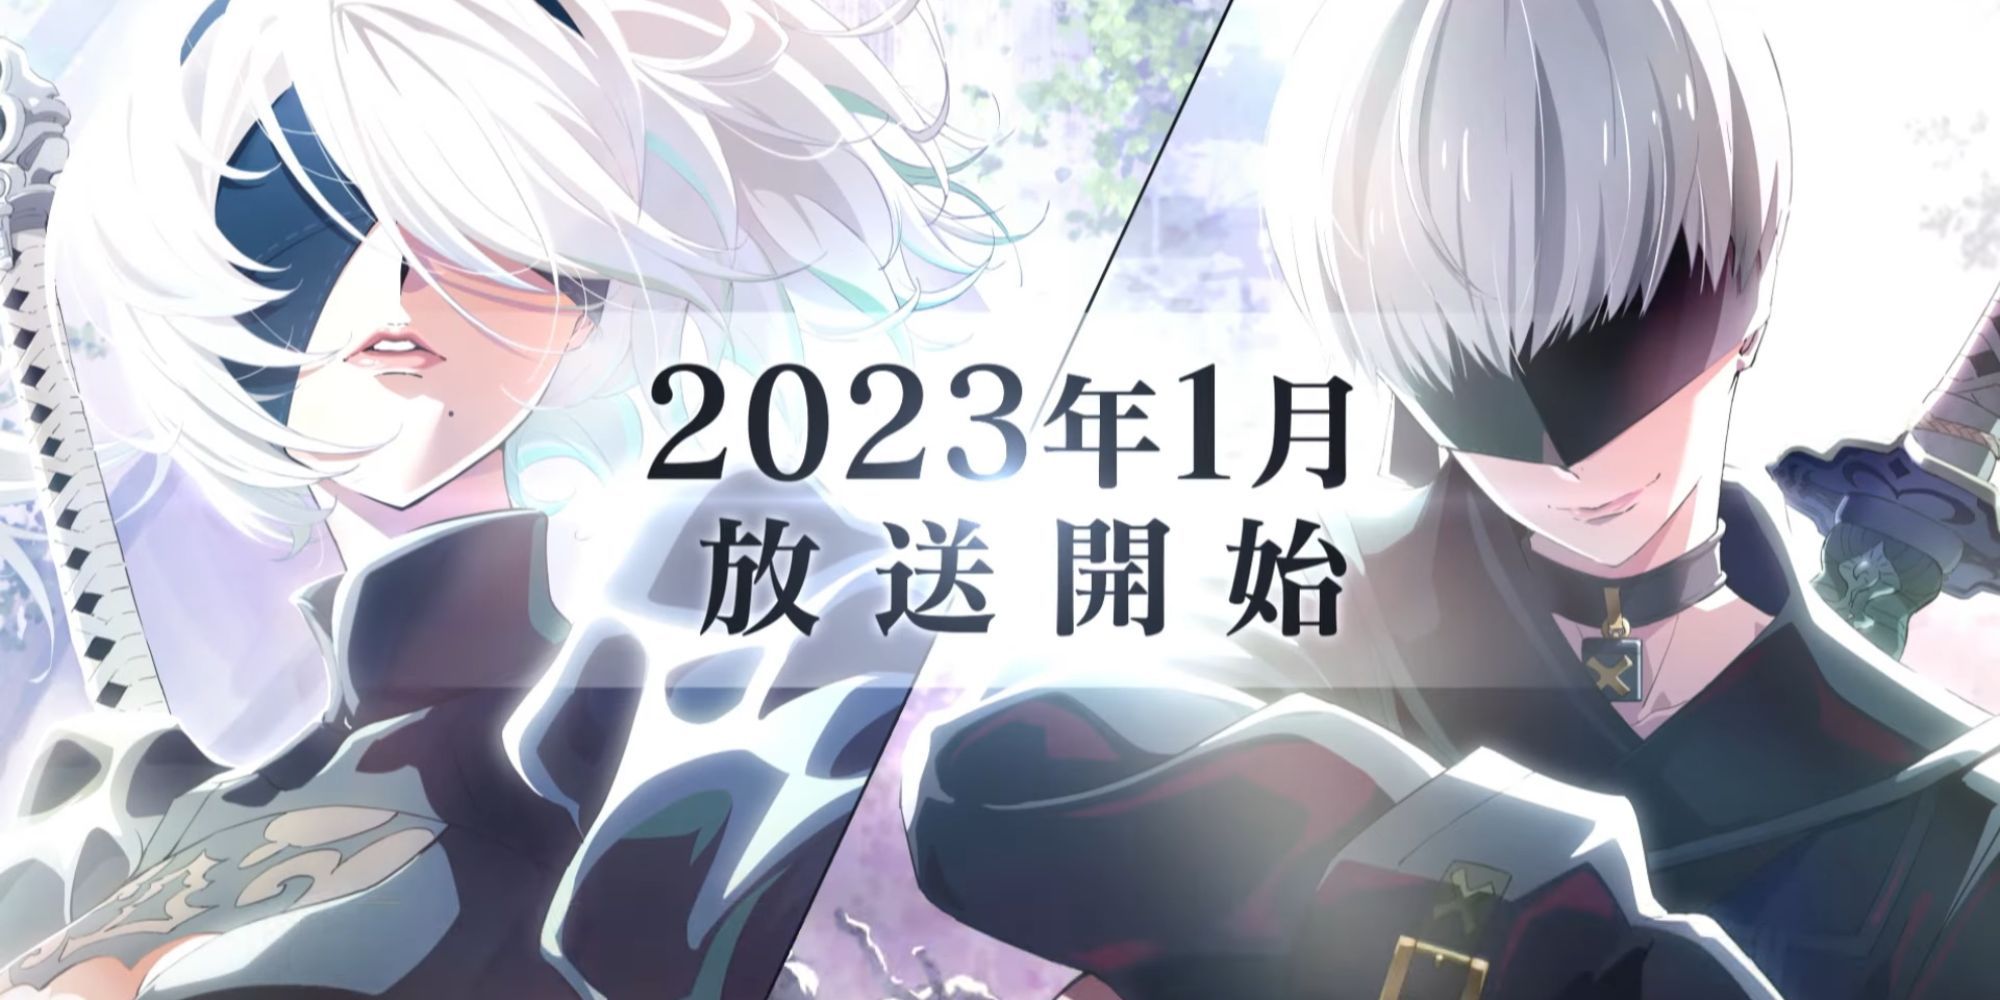 NieR: Automata  Anime Coming Next January